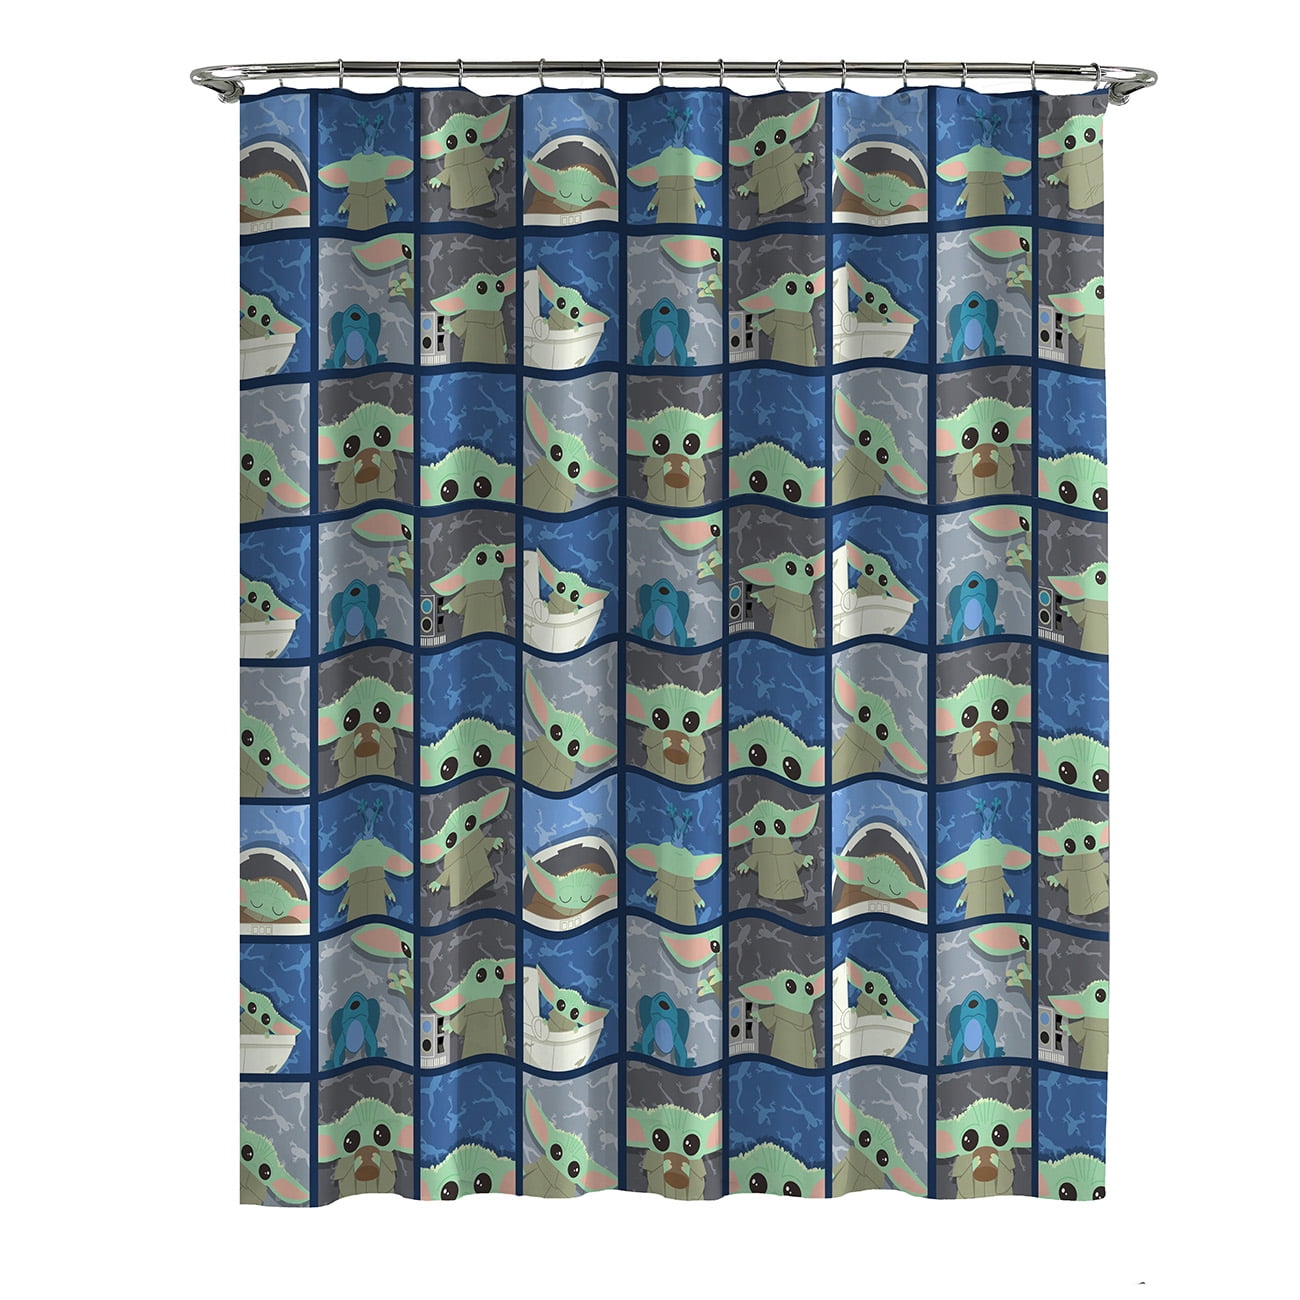 Baby Yoda 14-Piece Shower Curtain Set with Tufted Rug, 72 x 72, Microfiber, Green, Star Wars